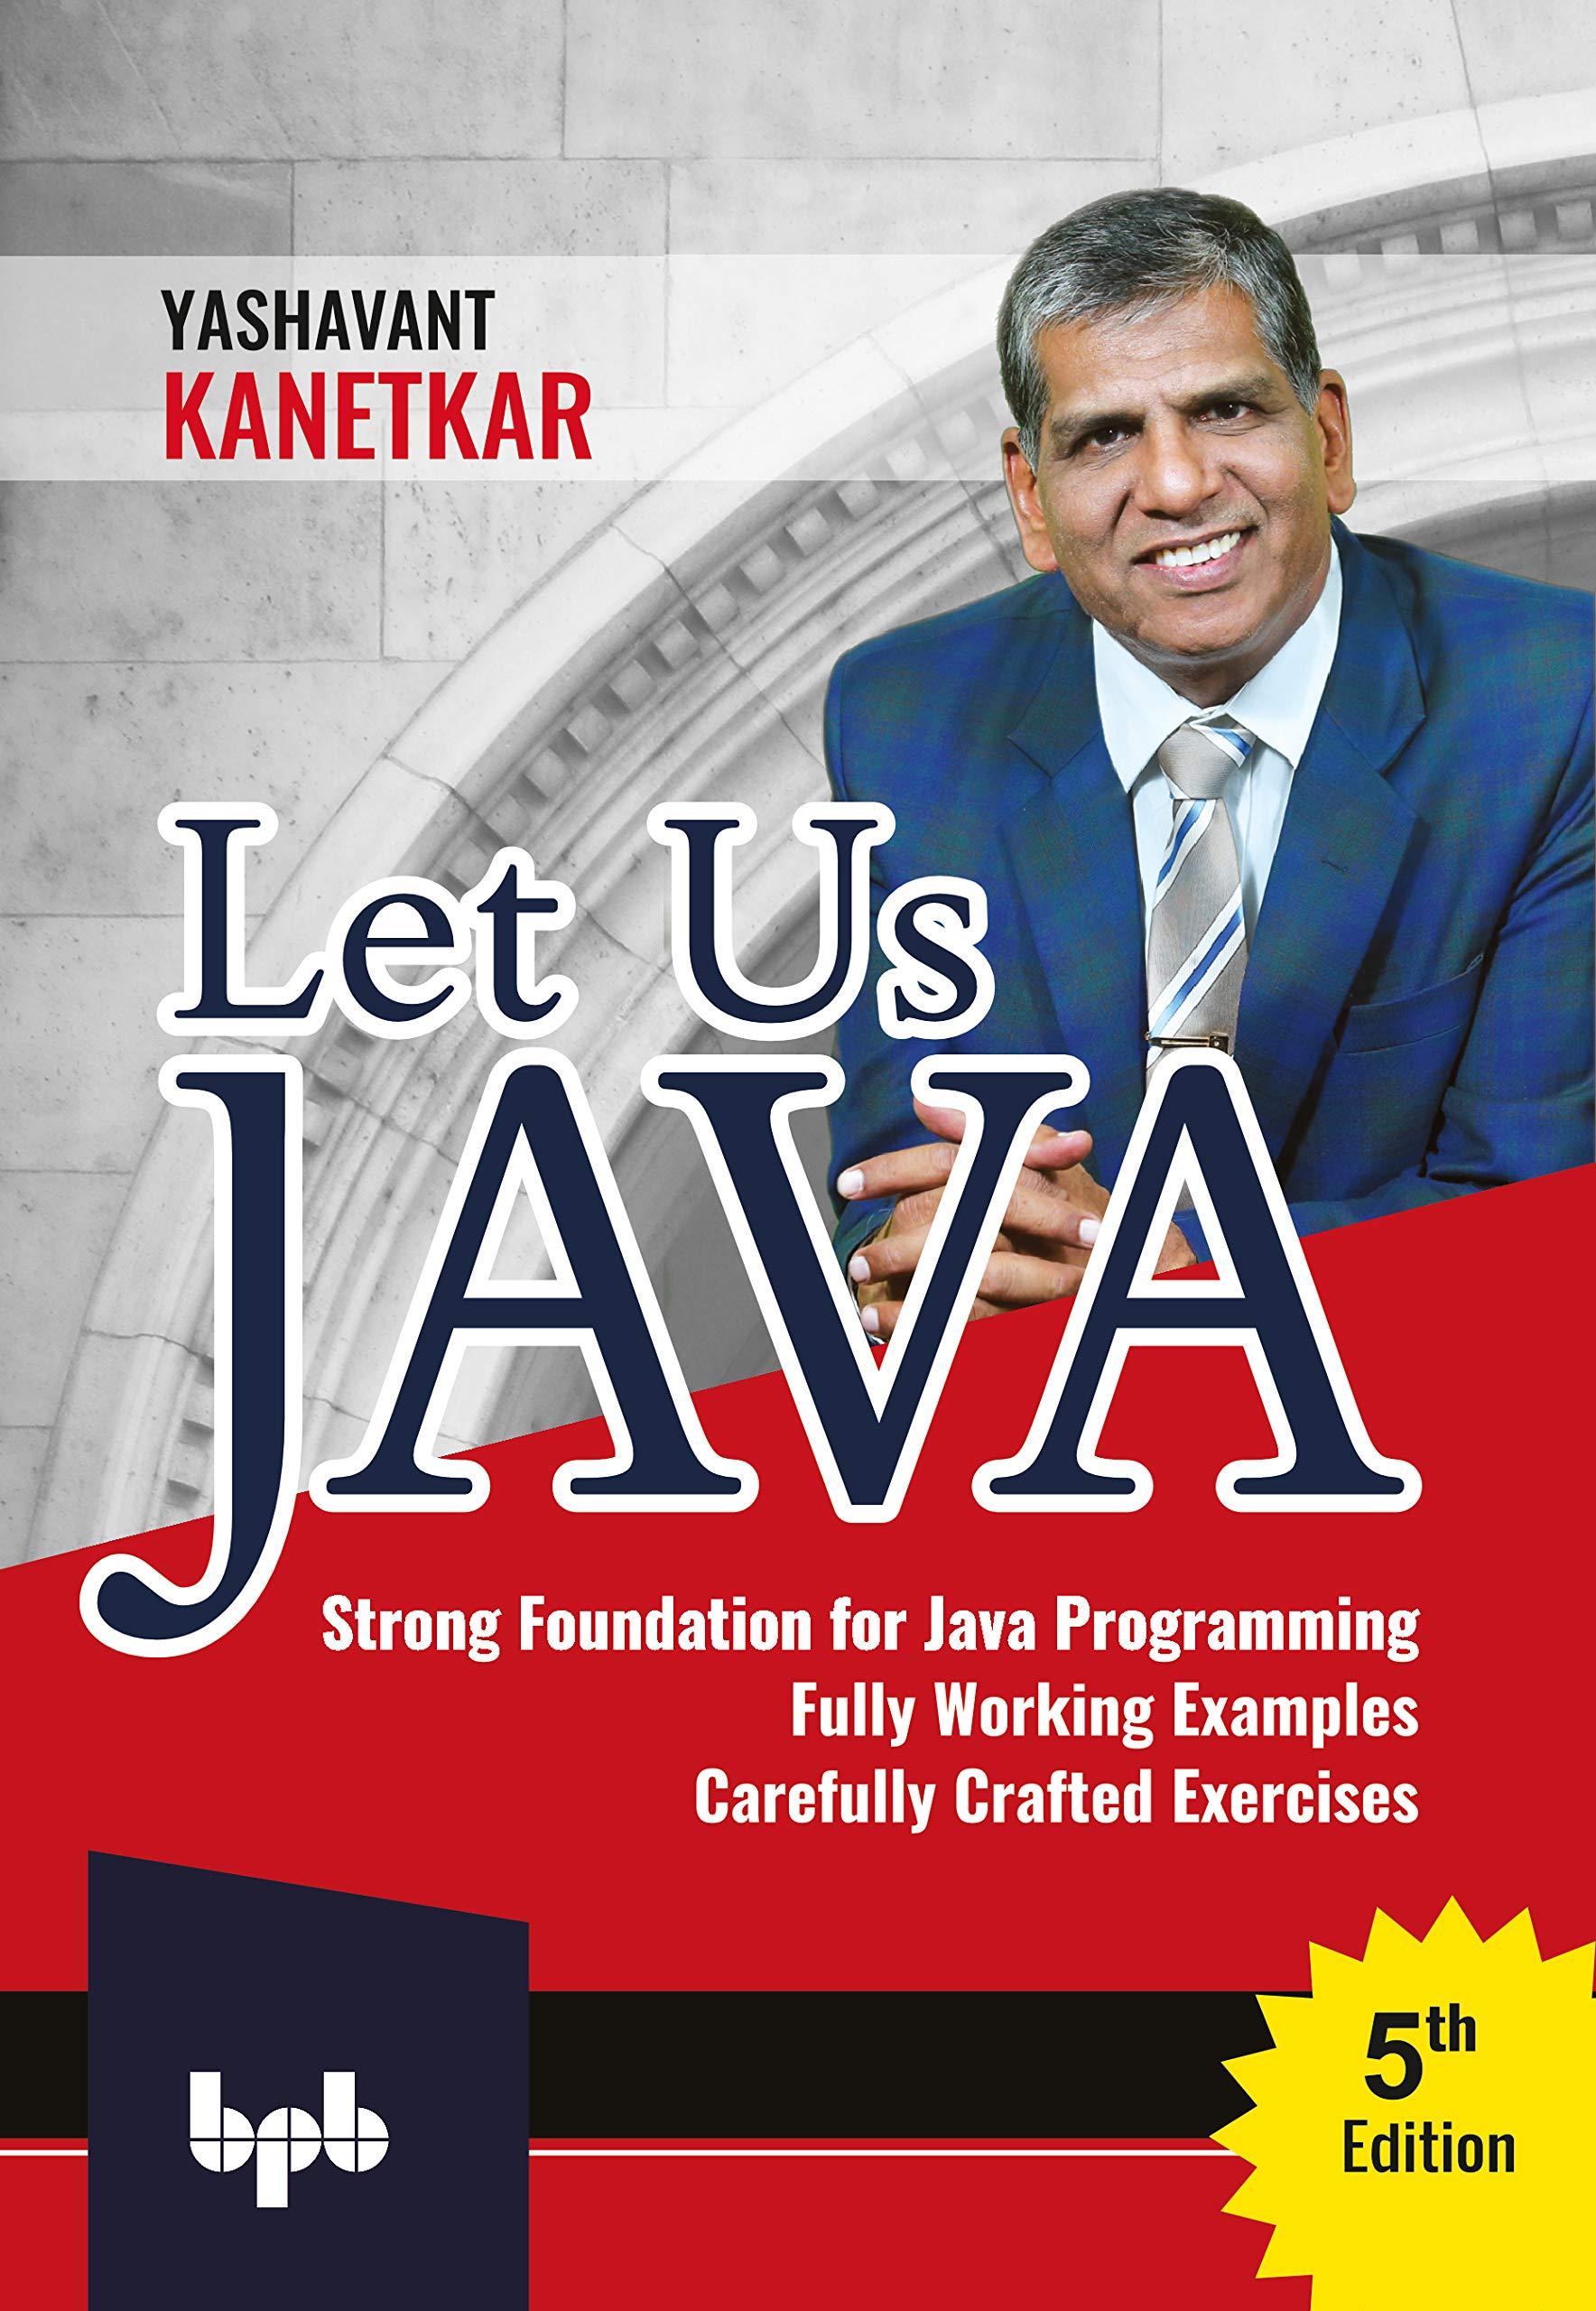 let us java strong foundation for java programming 5th edition yashavant kanetkar 9388176383, 978-9388176385